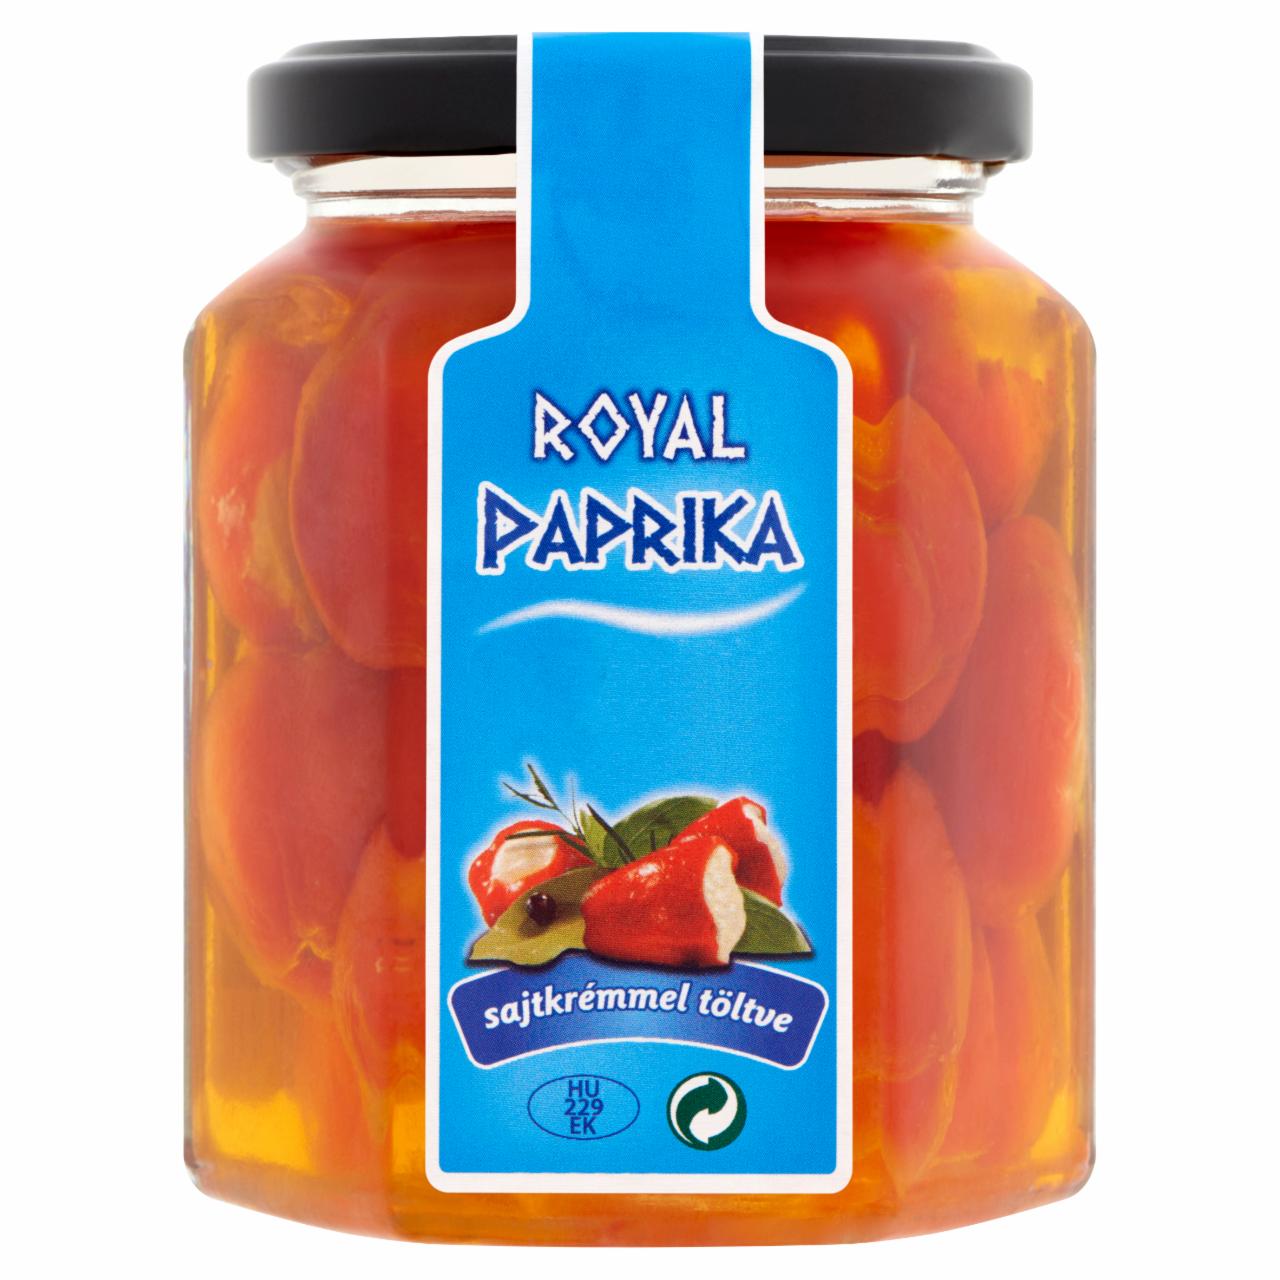 Képek - Royal paprika sajtkrémmel töltve 250 g